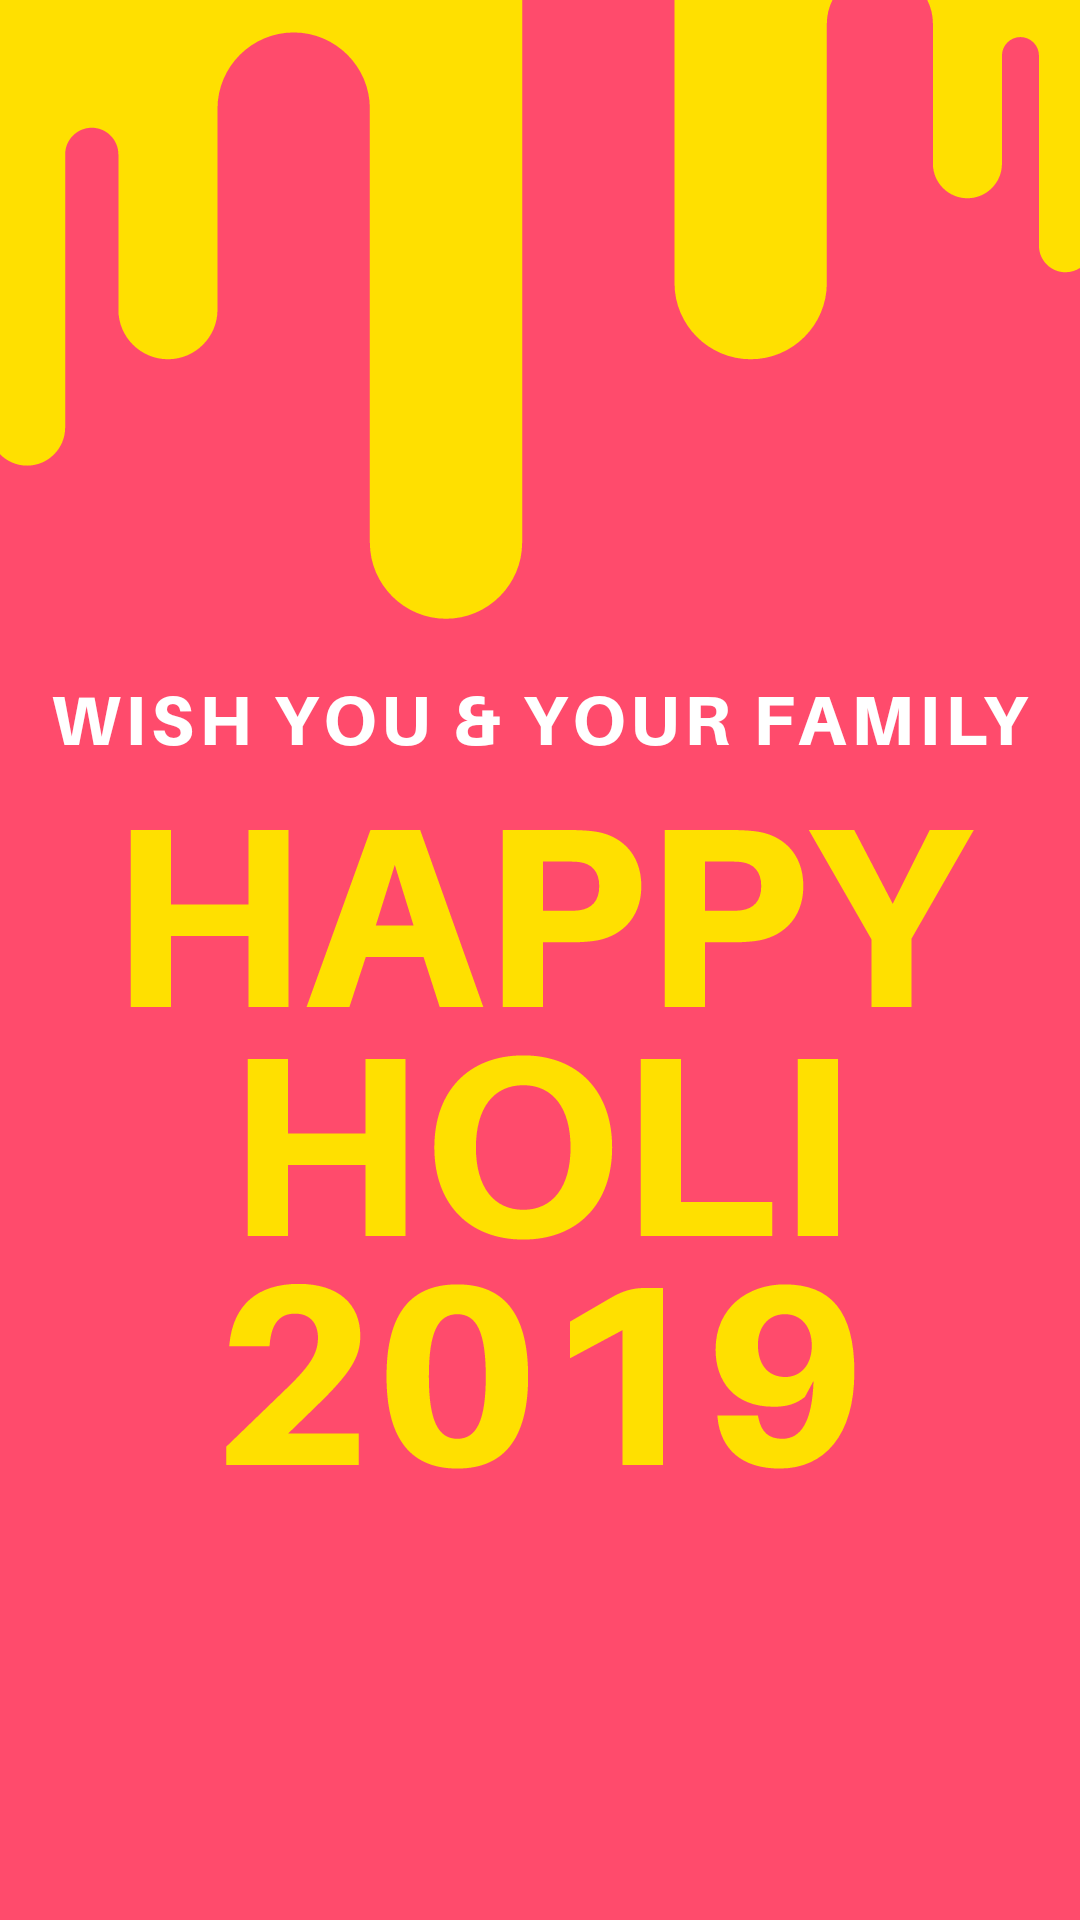 Happy Holi 2019 Image, Pics And Wallpaper